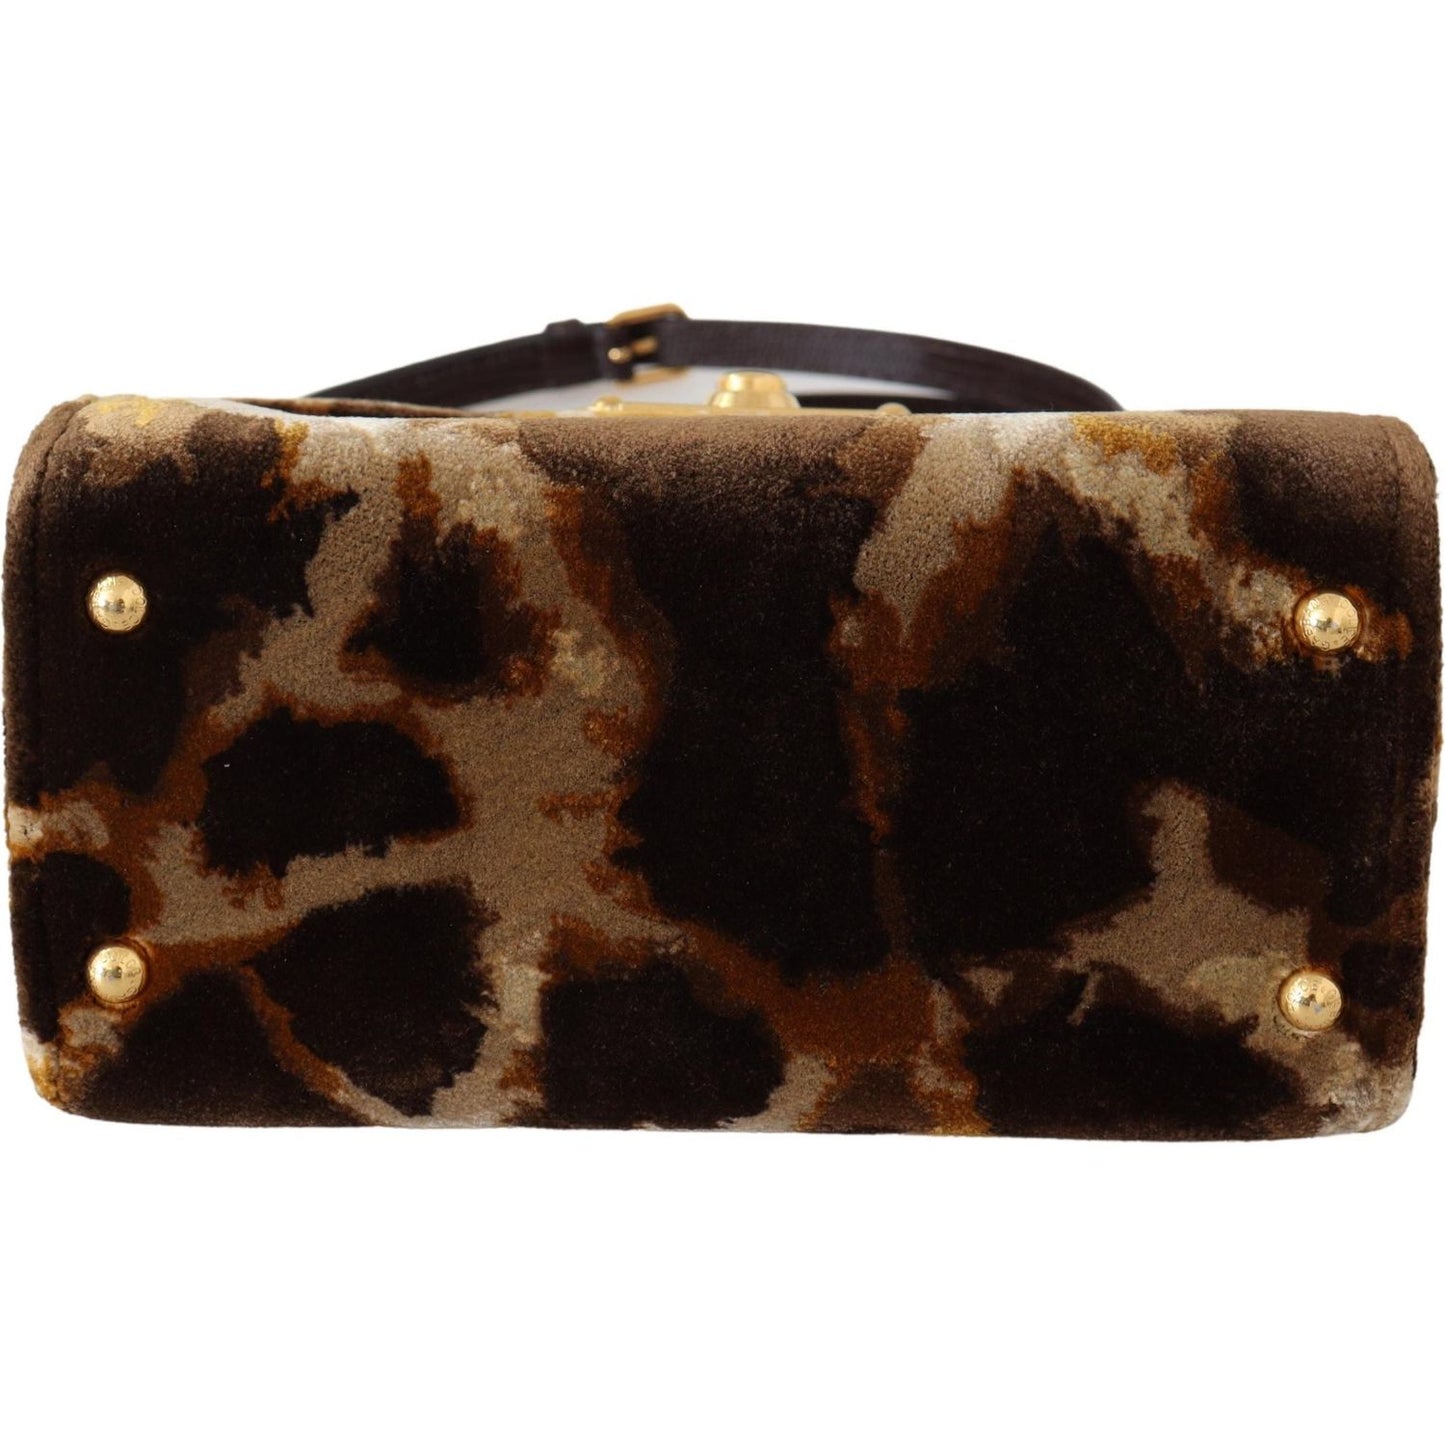 Dolce & Gabbana Elegant Giraffe Pattern Welcome Bag with Gold Accents brown-giraffe-crossbody-purse-borse-welcome-purse IMG_2377-3a9ece7a-67e.jpg